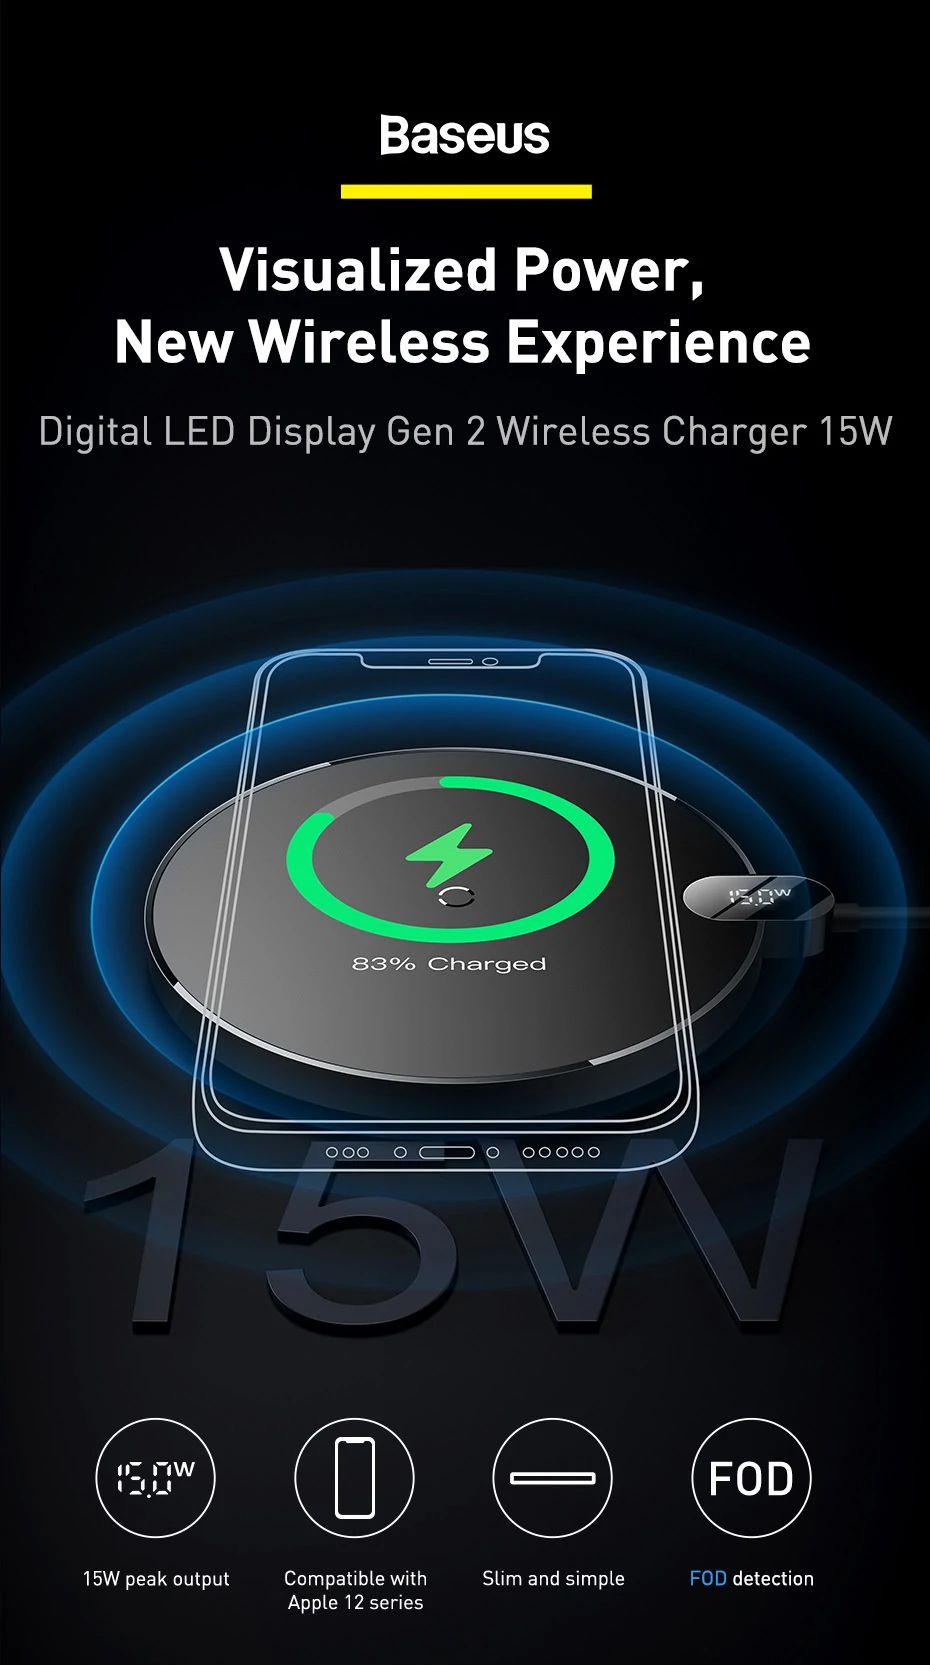 Baseus 15w Digital Led Display Gen 2 Wireless Charger (2)